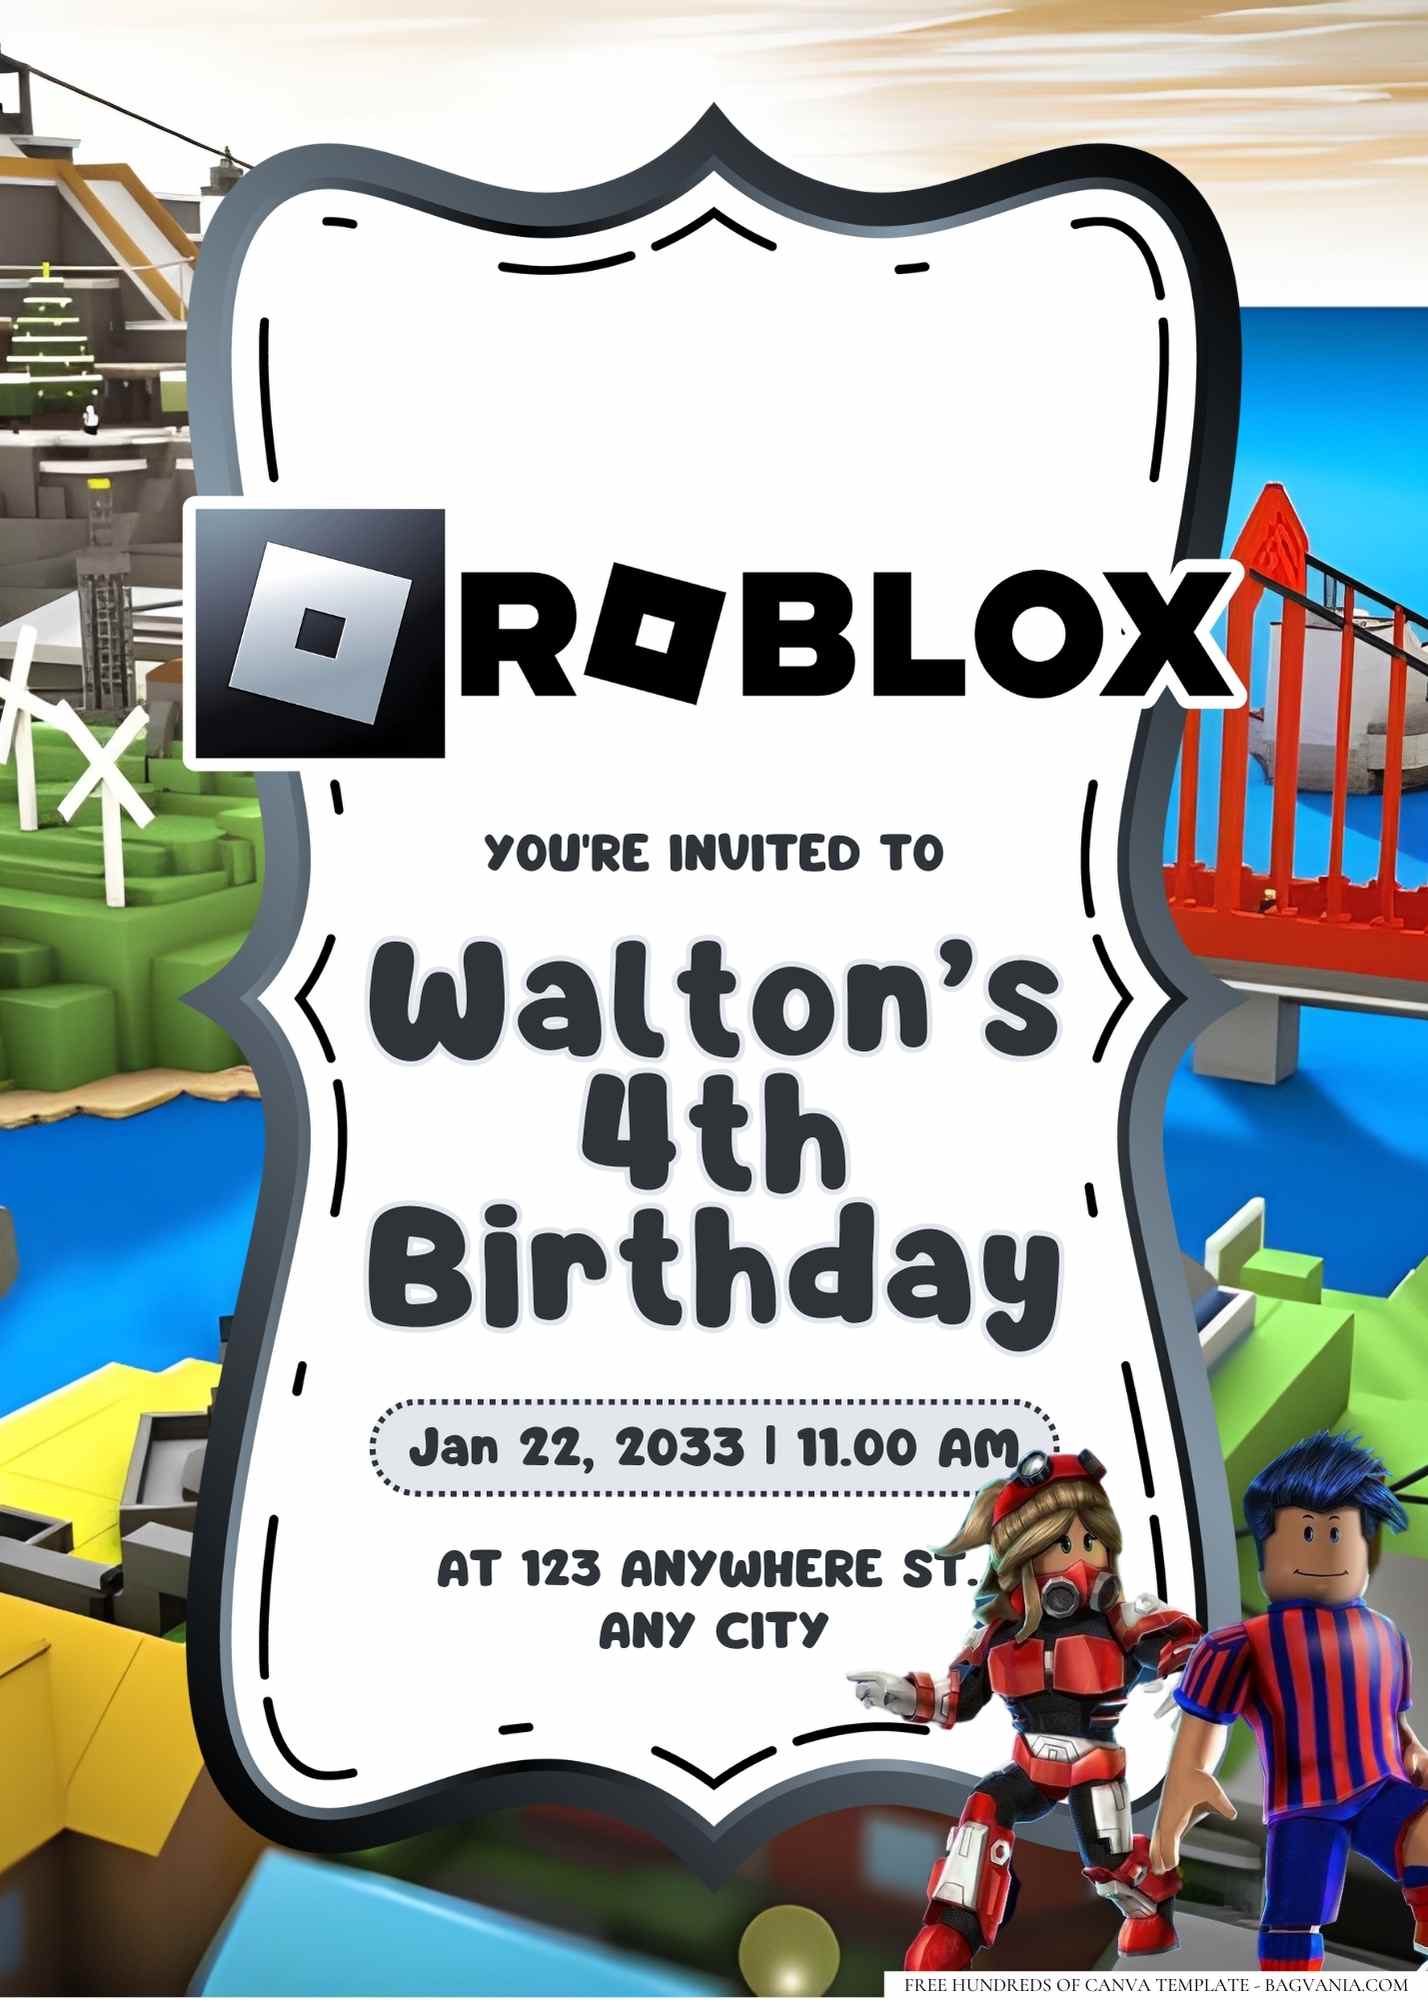 FREE PRINTABLE) – ROBLOX Birthday Party Kits Templates  Download Hundreds  FREE PRINTABLE Birthday Invitation Templates